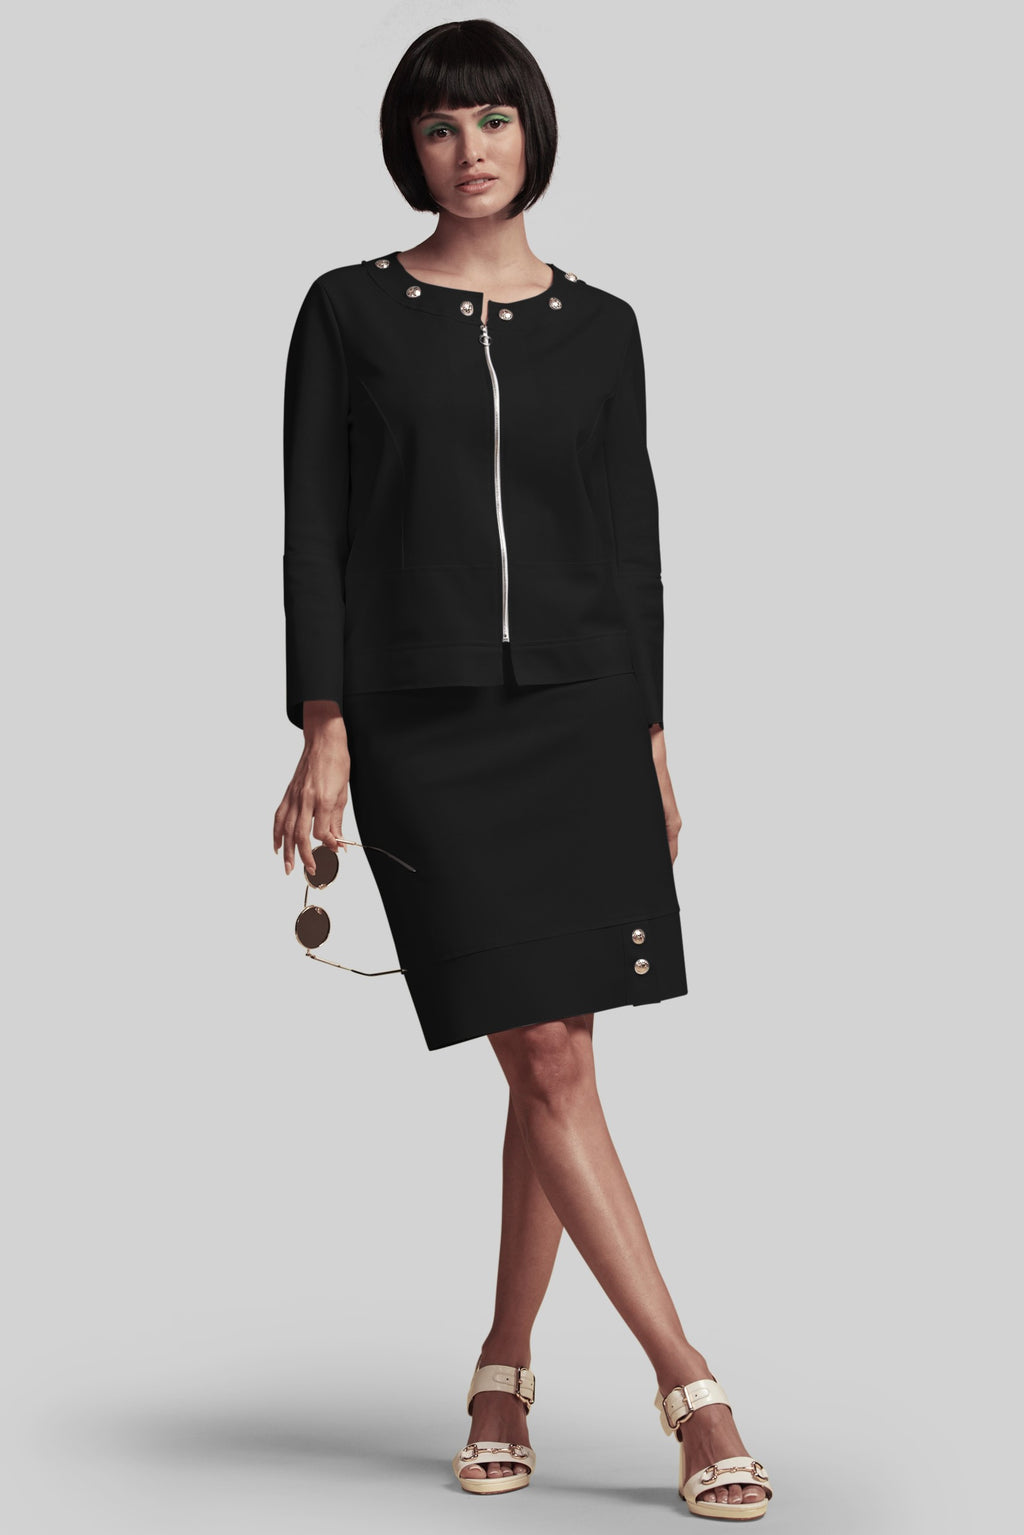 Tahari Peplum Skirt Suit in Black | Lyst